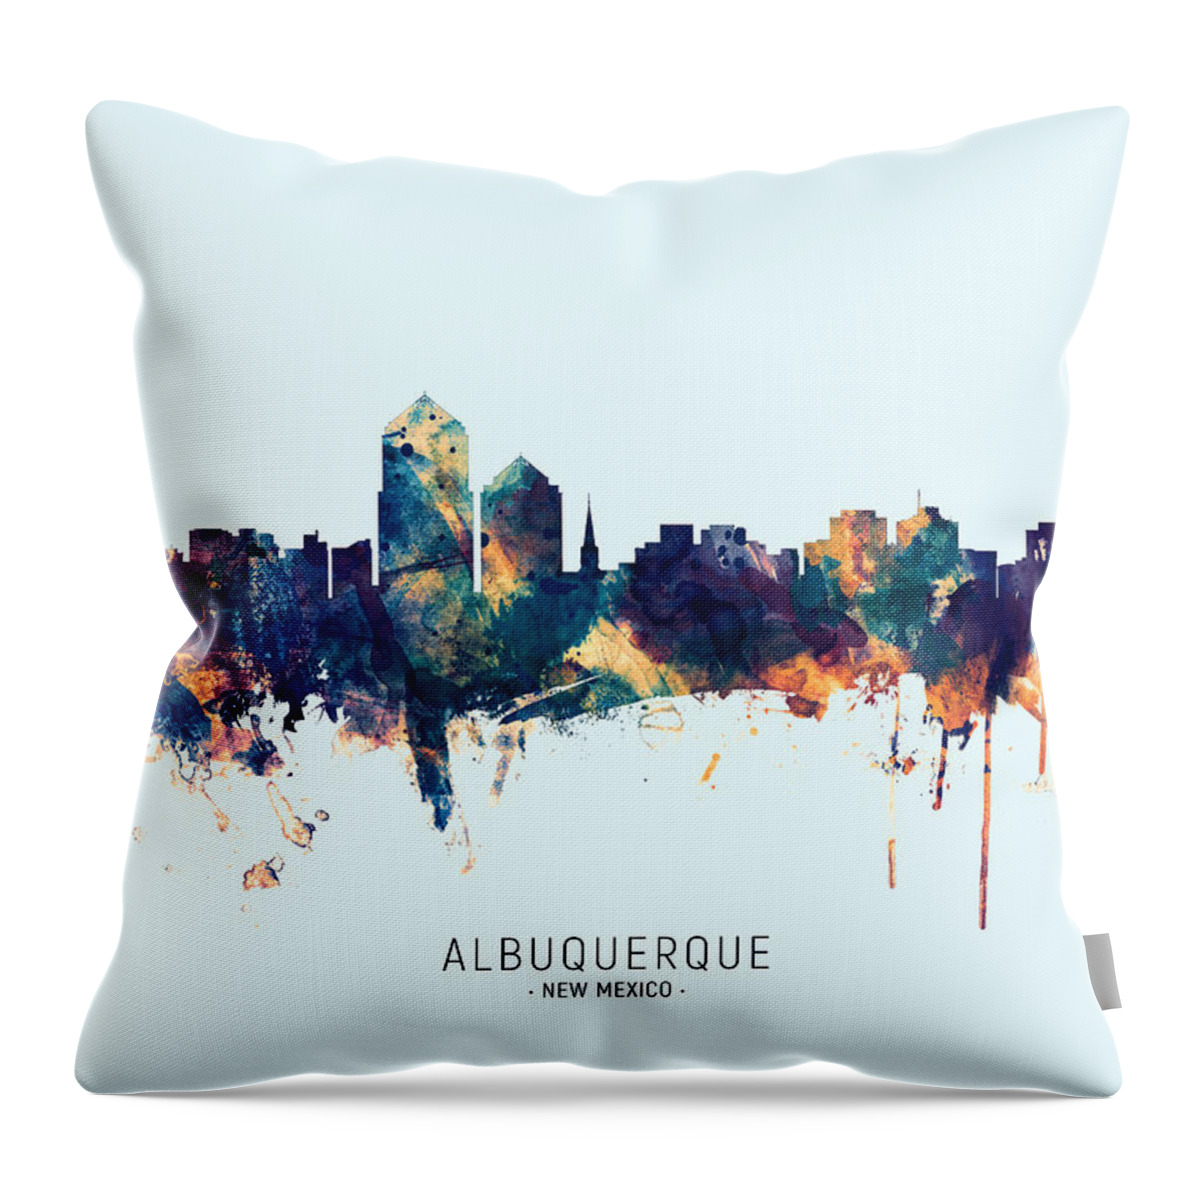 Albuquerque Throw Pillow featuring the digital art Albuquerque New Mexico Skyline #30 by Michael Tompsett